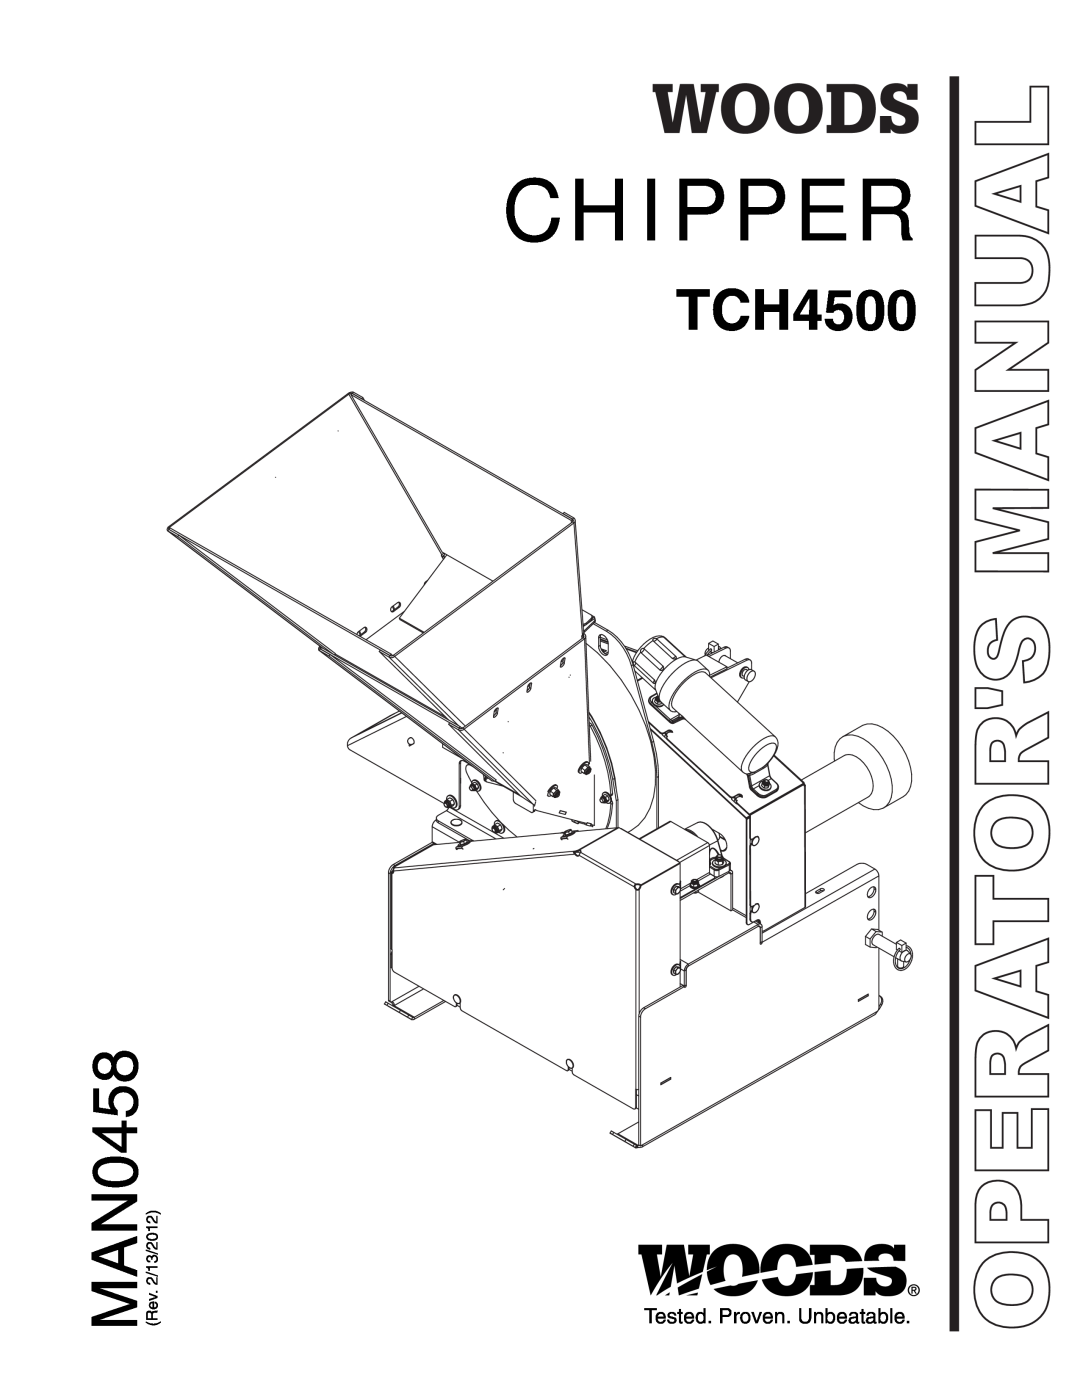 Woods Equipment TCH4500 manual Operators, Chipper, MAN0458, Manual 